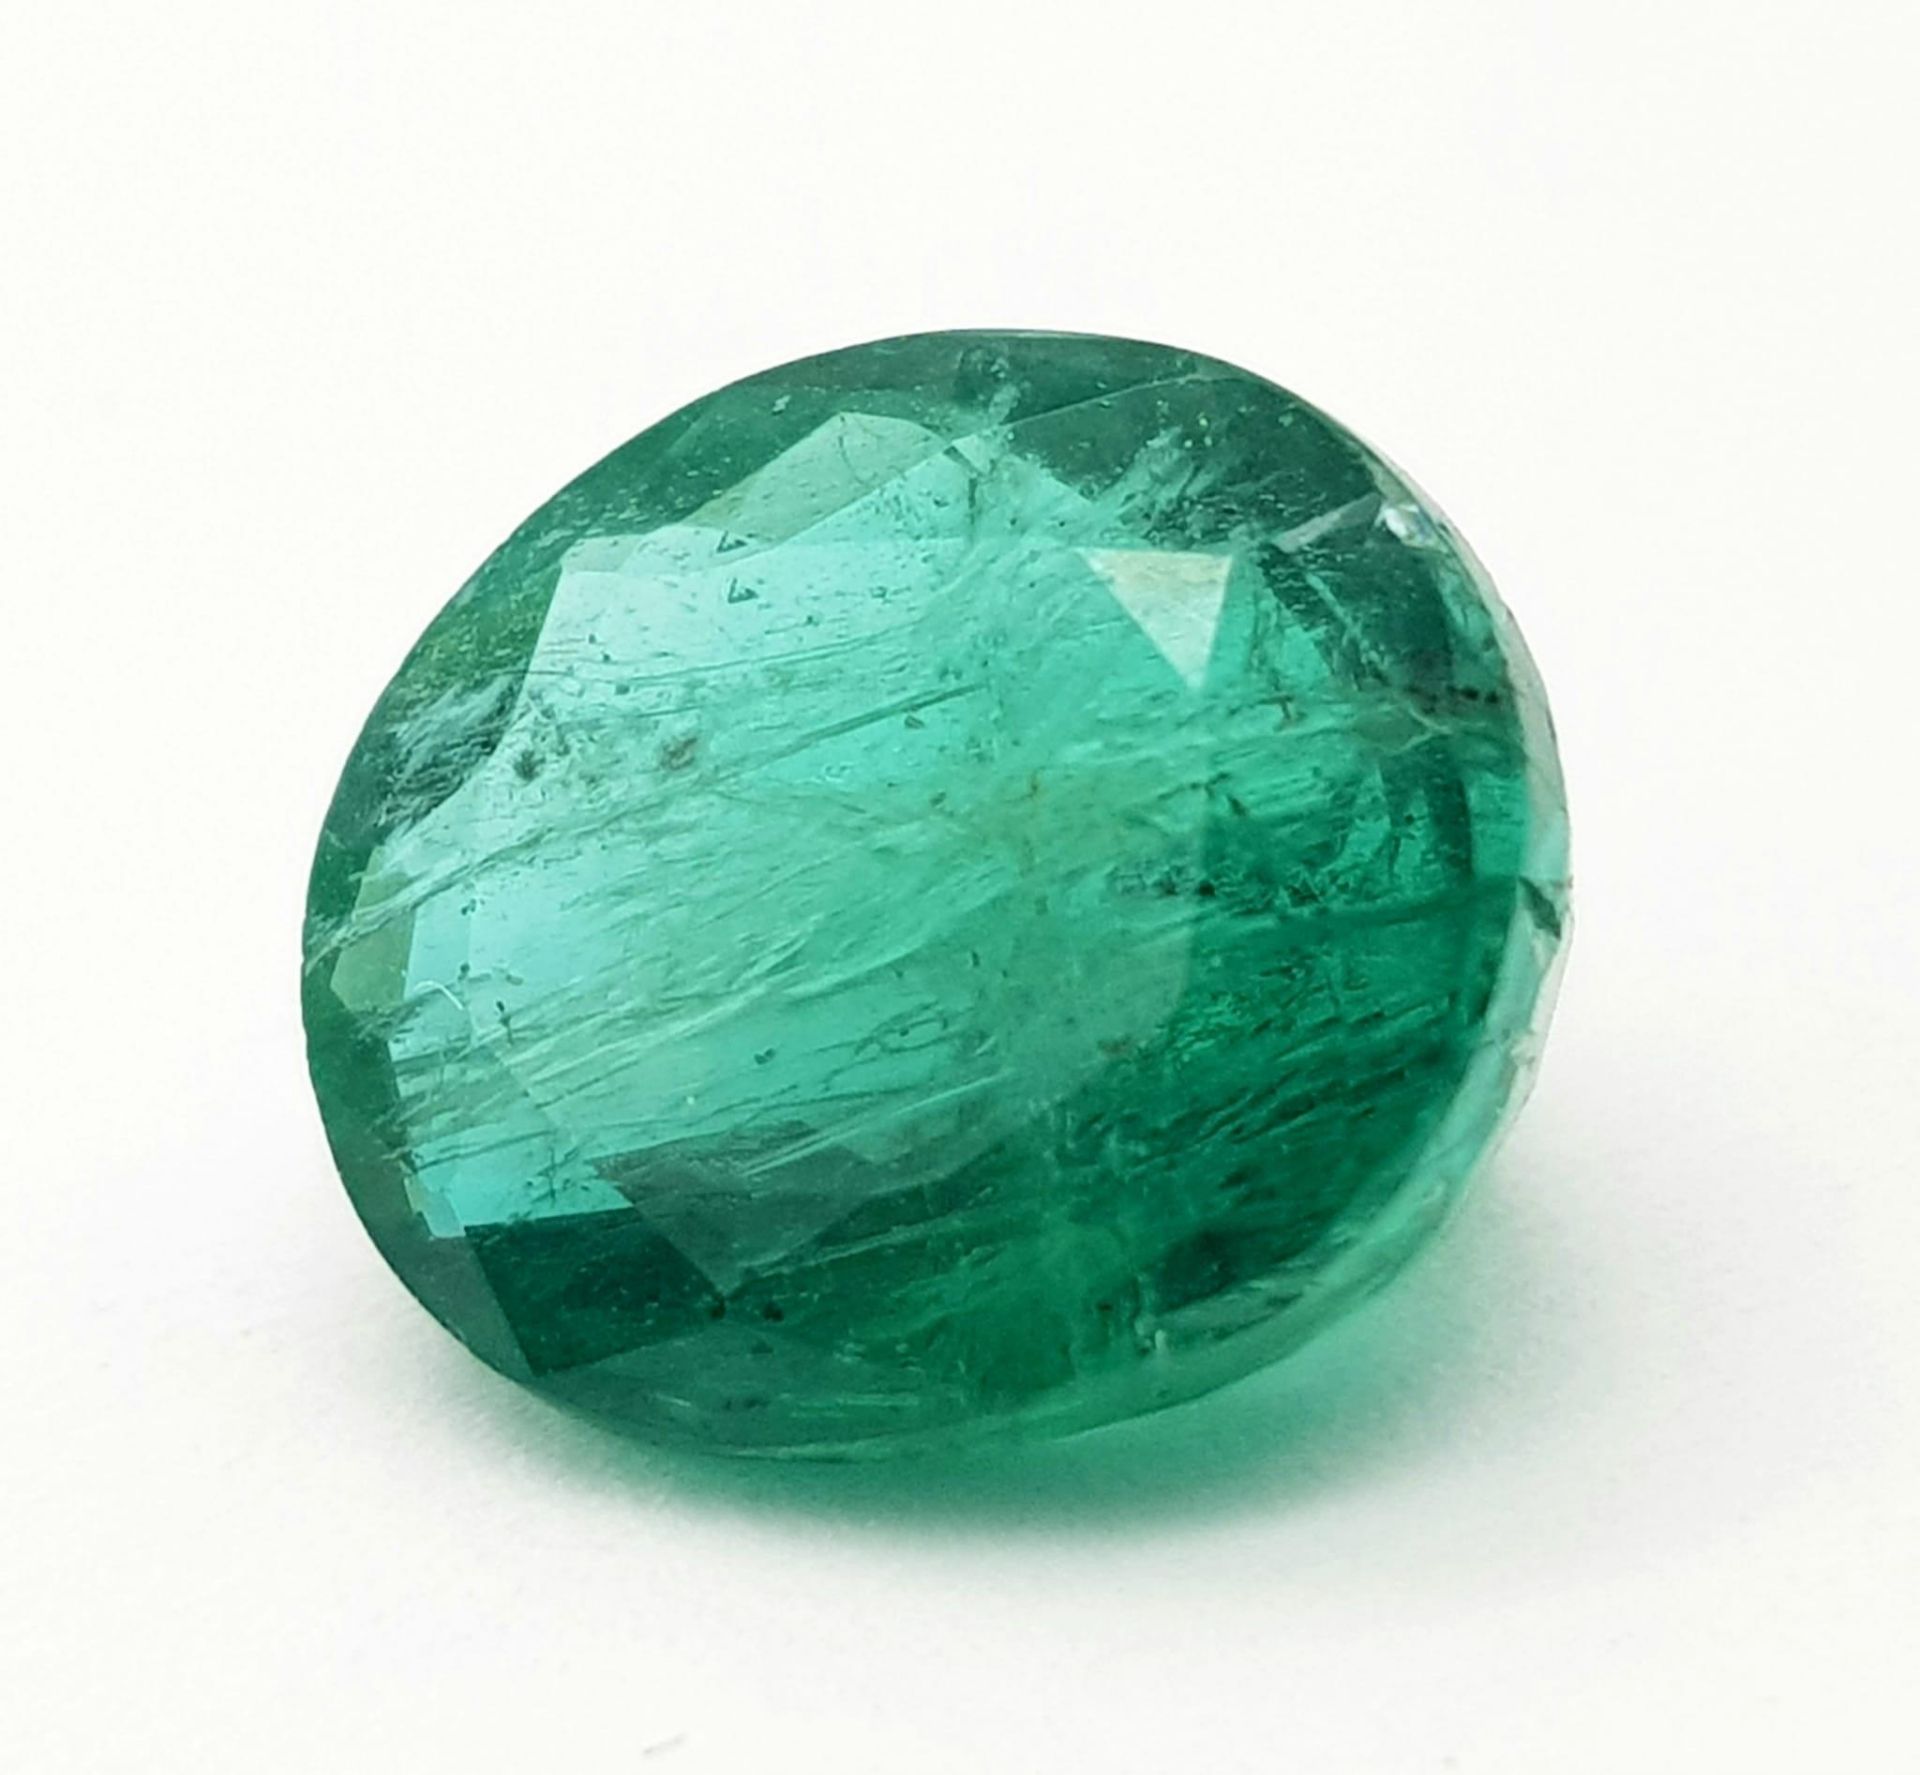 A 4.86ct Zambian Emerald - GTL certified. - Image 2 of 7